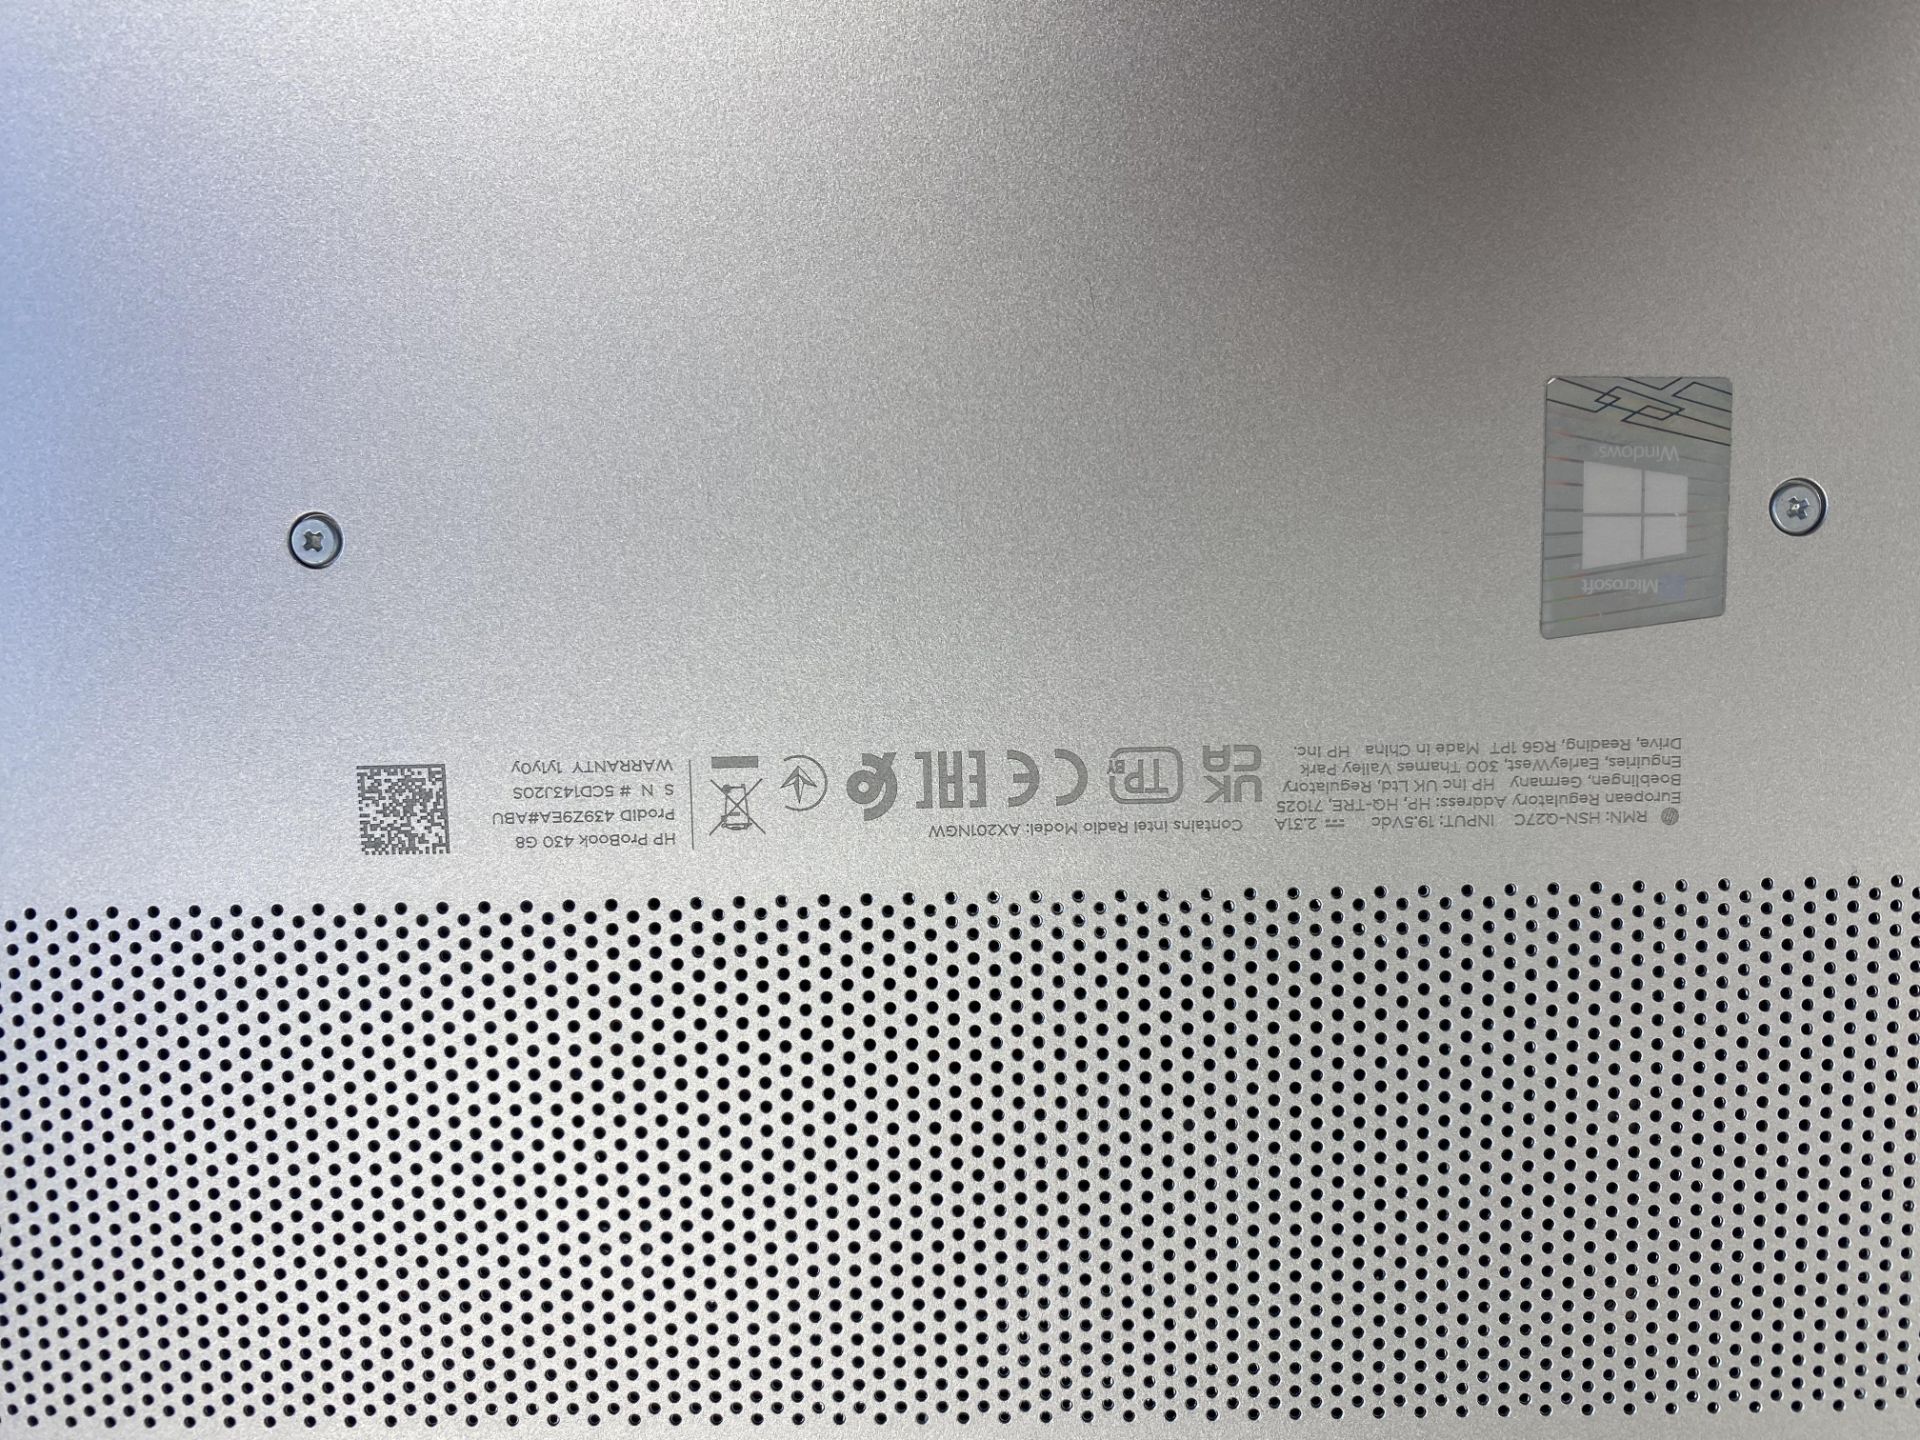 Hewlett Packard HP ProBook 430GB laptop with Intel I5 processor - Image 3 of 3